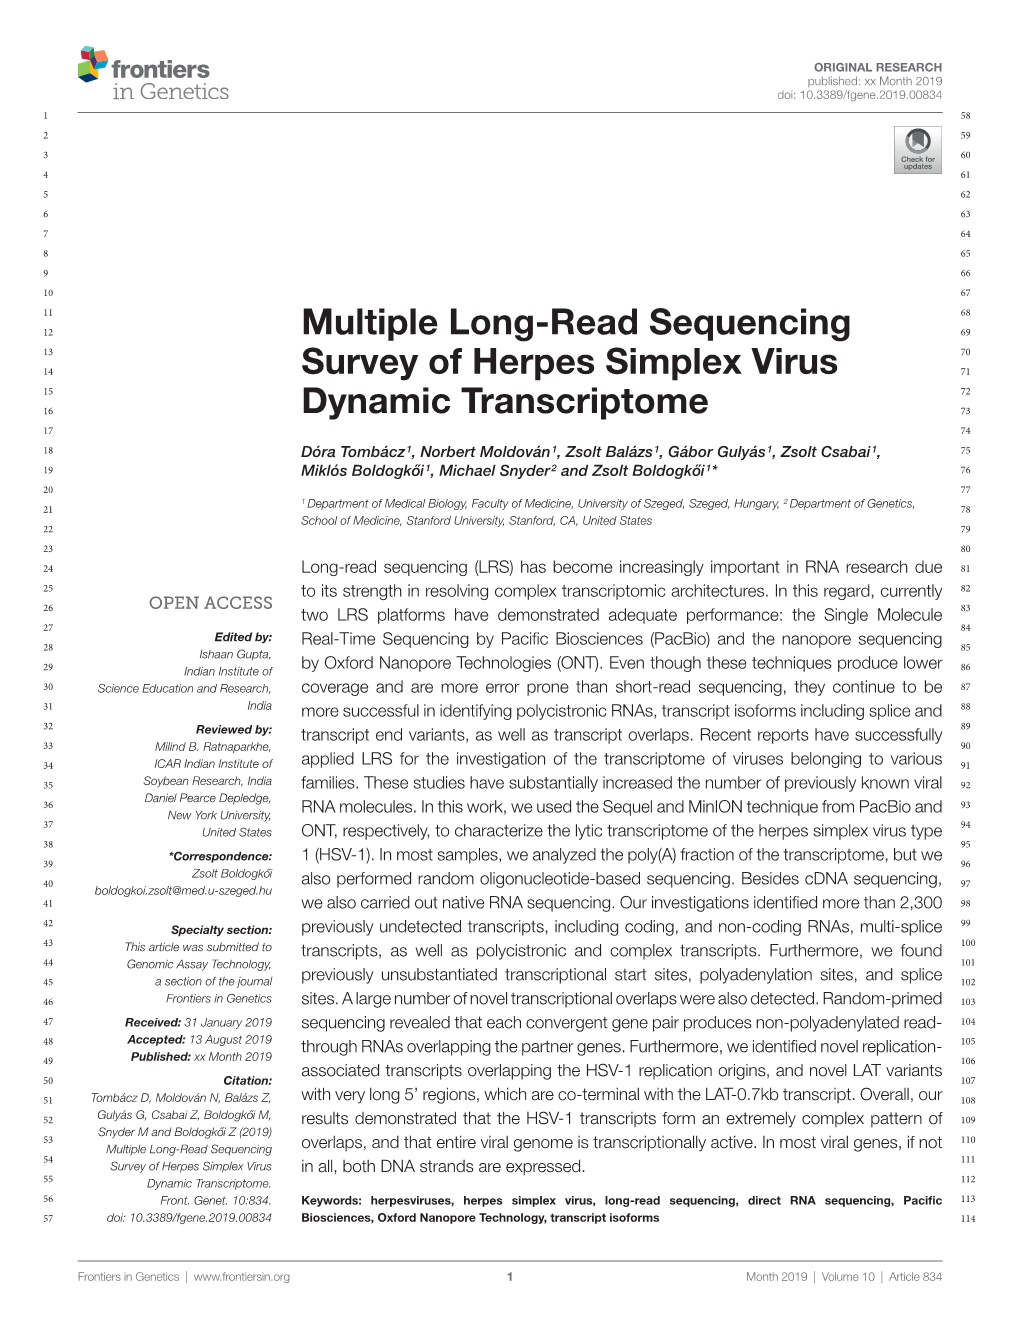 Multiple Long-Read Sequencing Survey of Herpes Simplex Virus